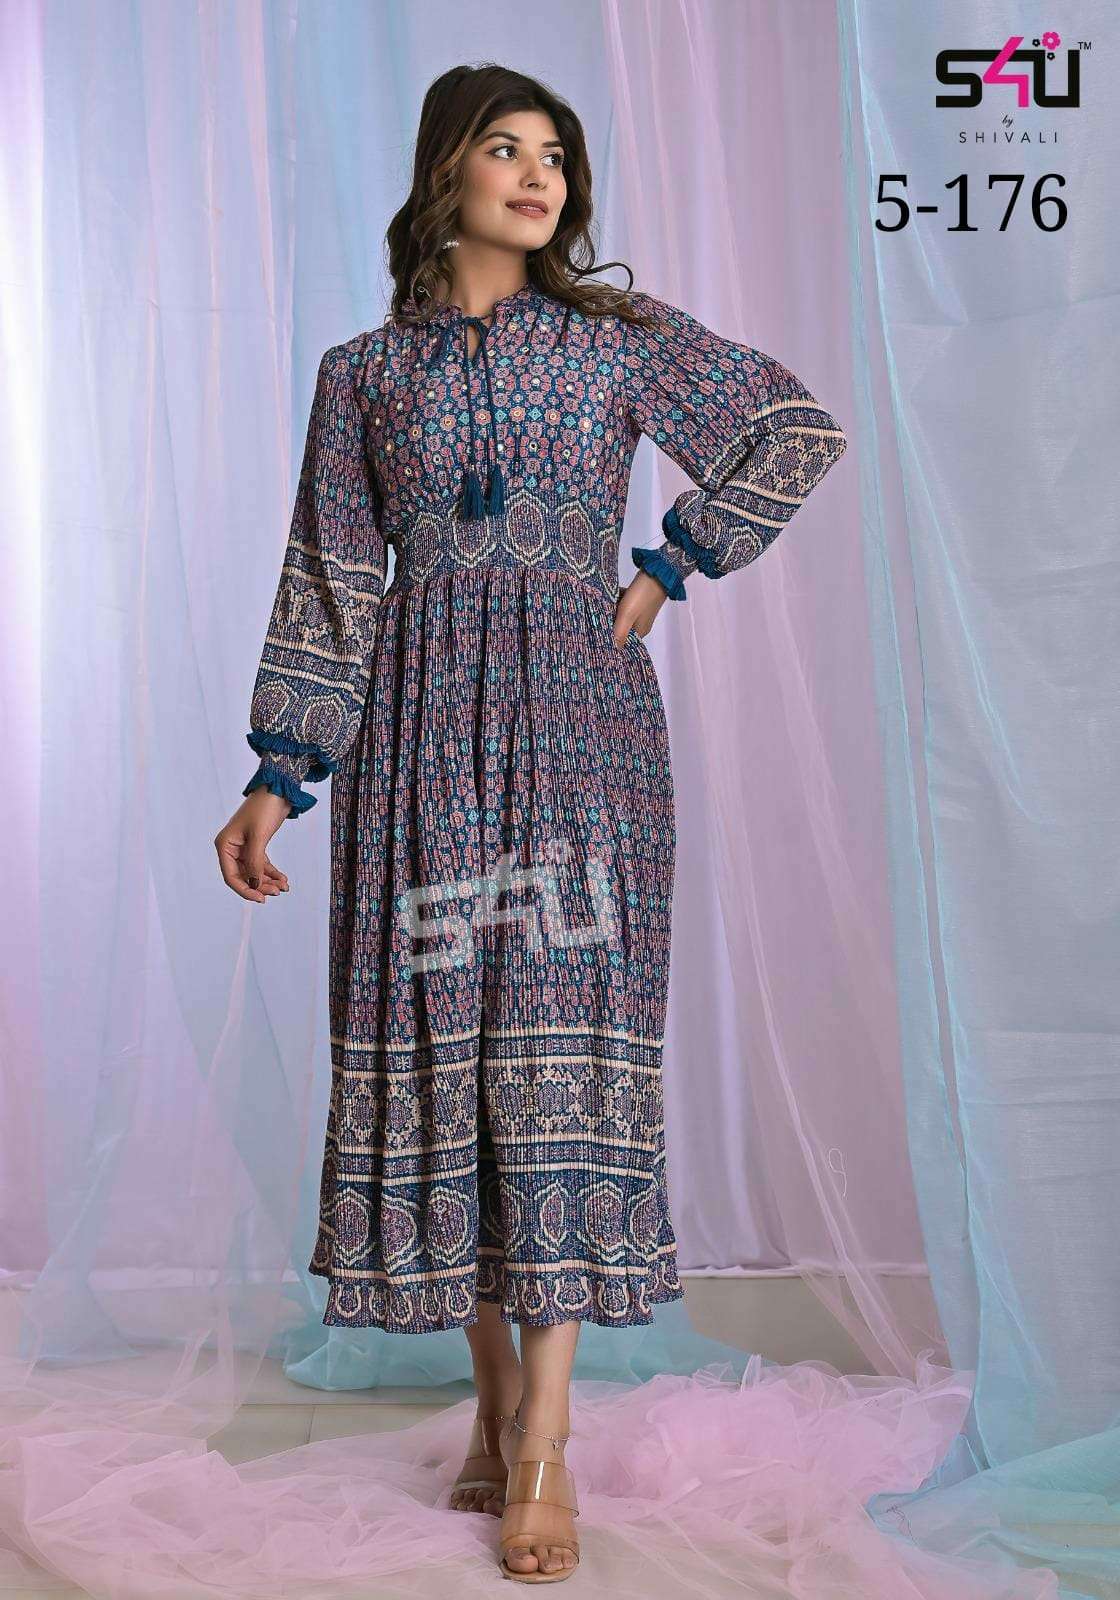 Buy PAYURI Fashion Women's Cotton Anarkali Long Kurti One Piece Dress  Rajasthani Print Multicolour XL at Amazon.in